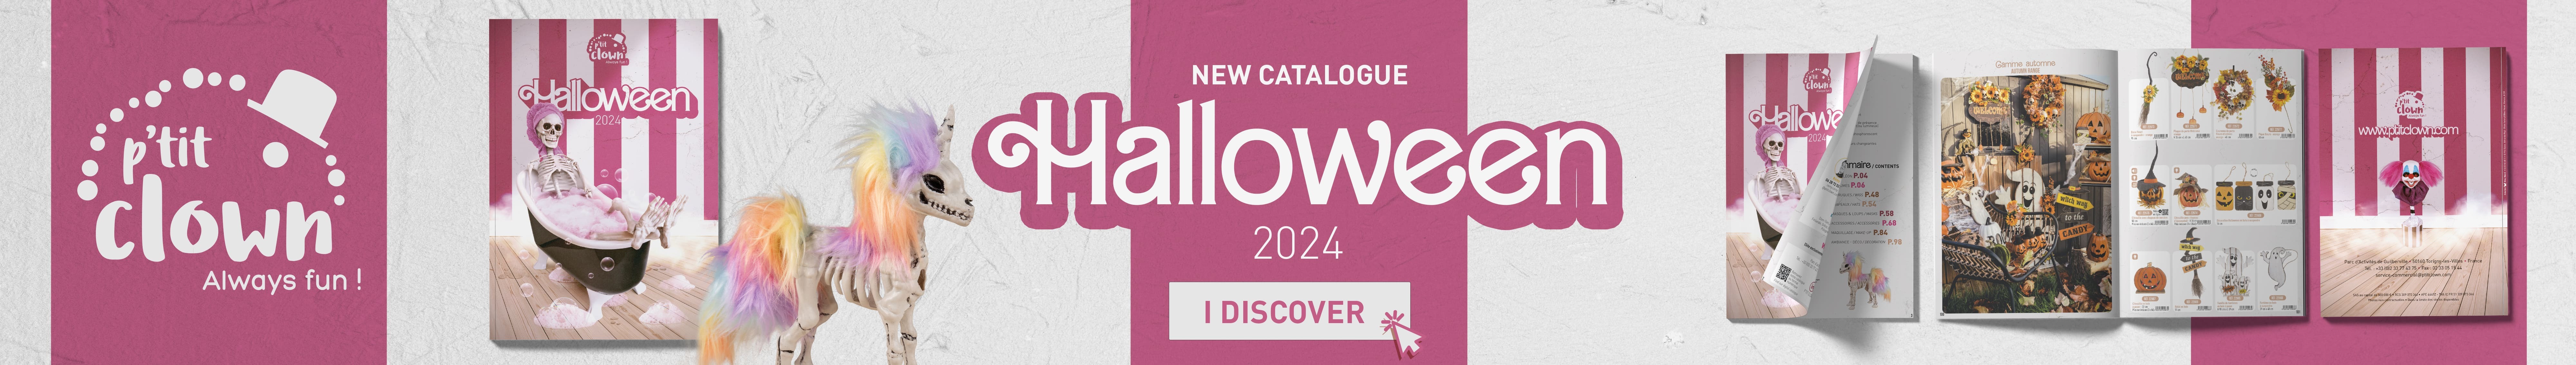 catalog-halloween-2024-4 (1)